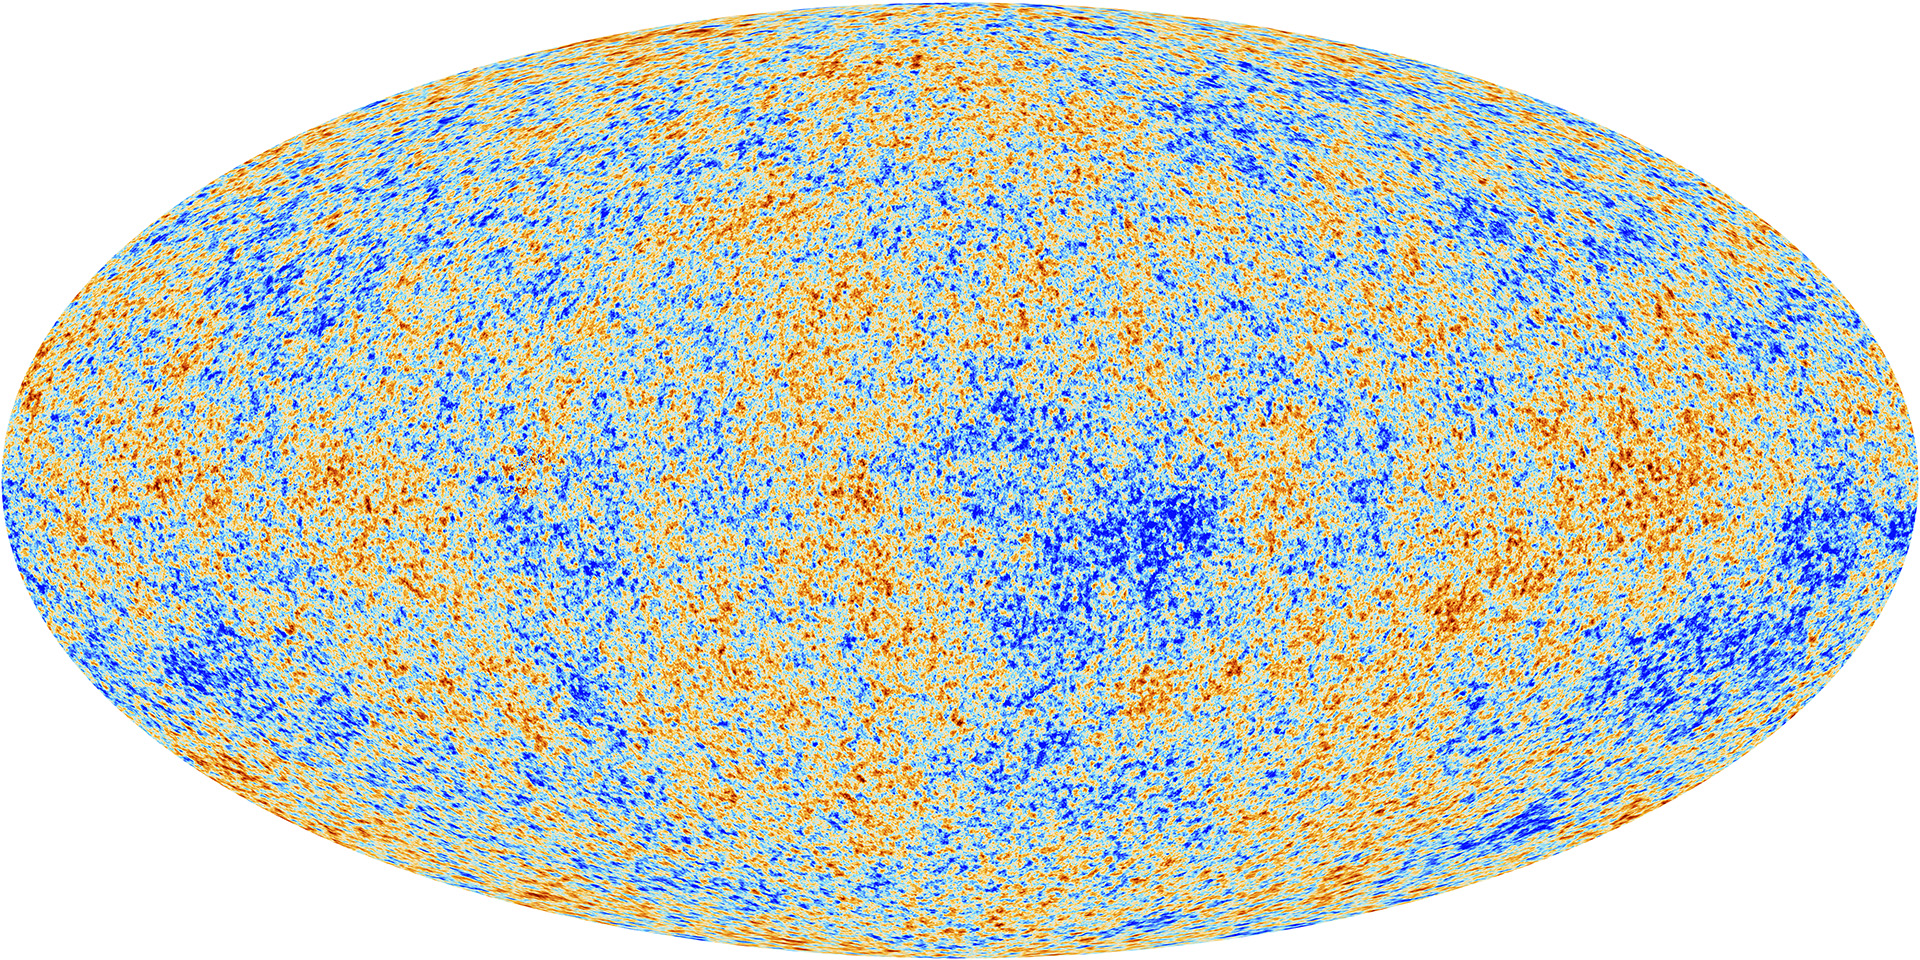 Planck sky image